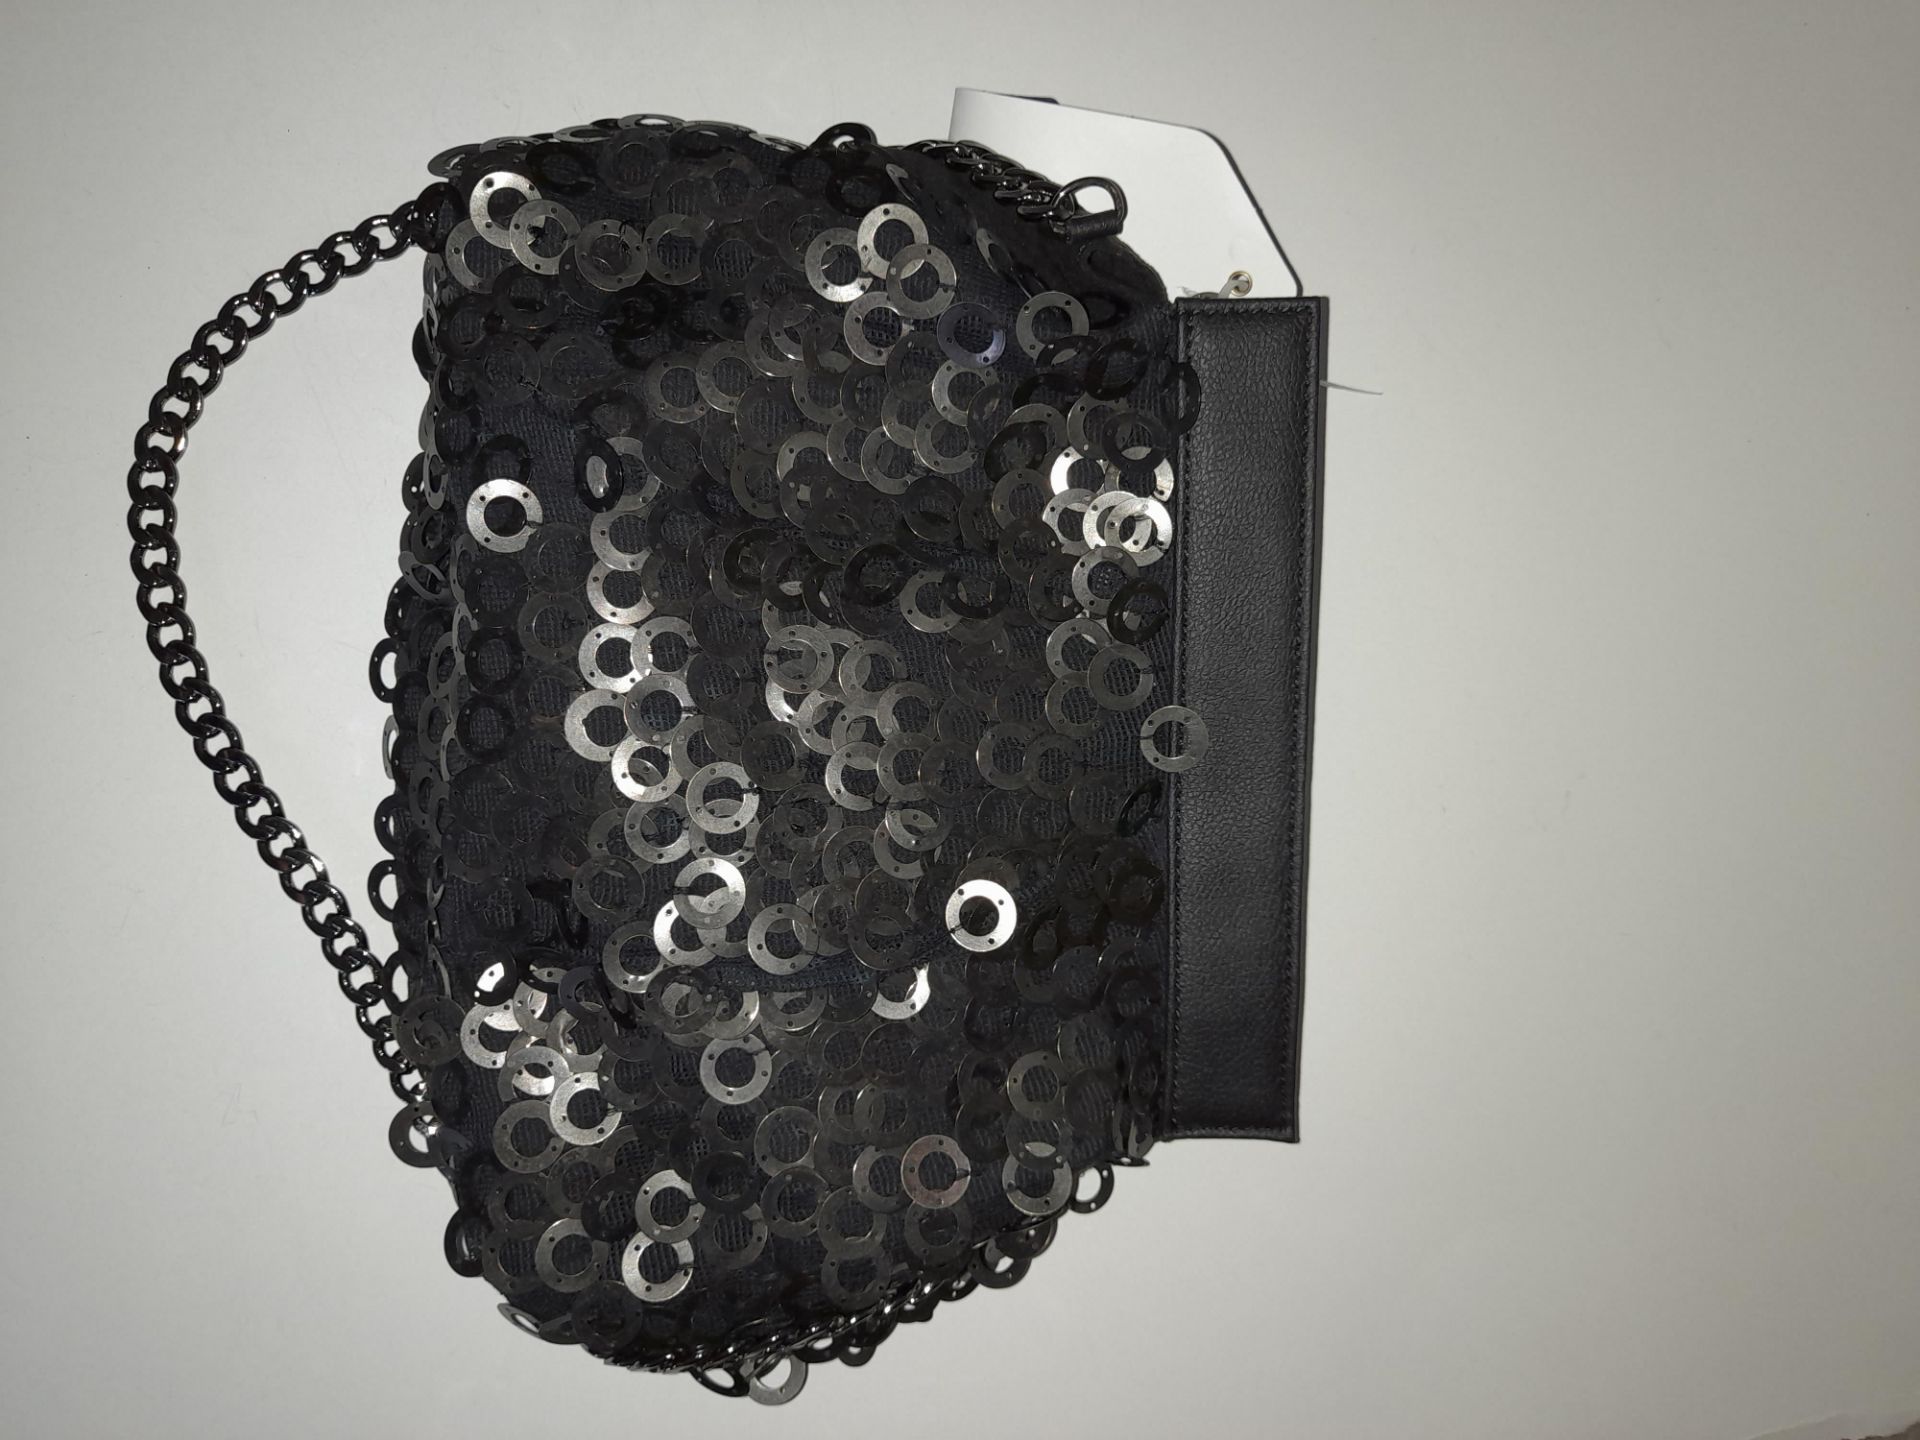 Maviya “Saturn” Evening Bag with Metal Chain Effect and Mesh Fabric, Vegan Italian Leather - Image 2 of 3